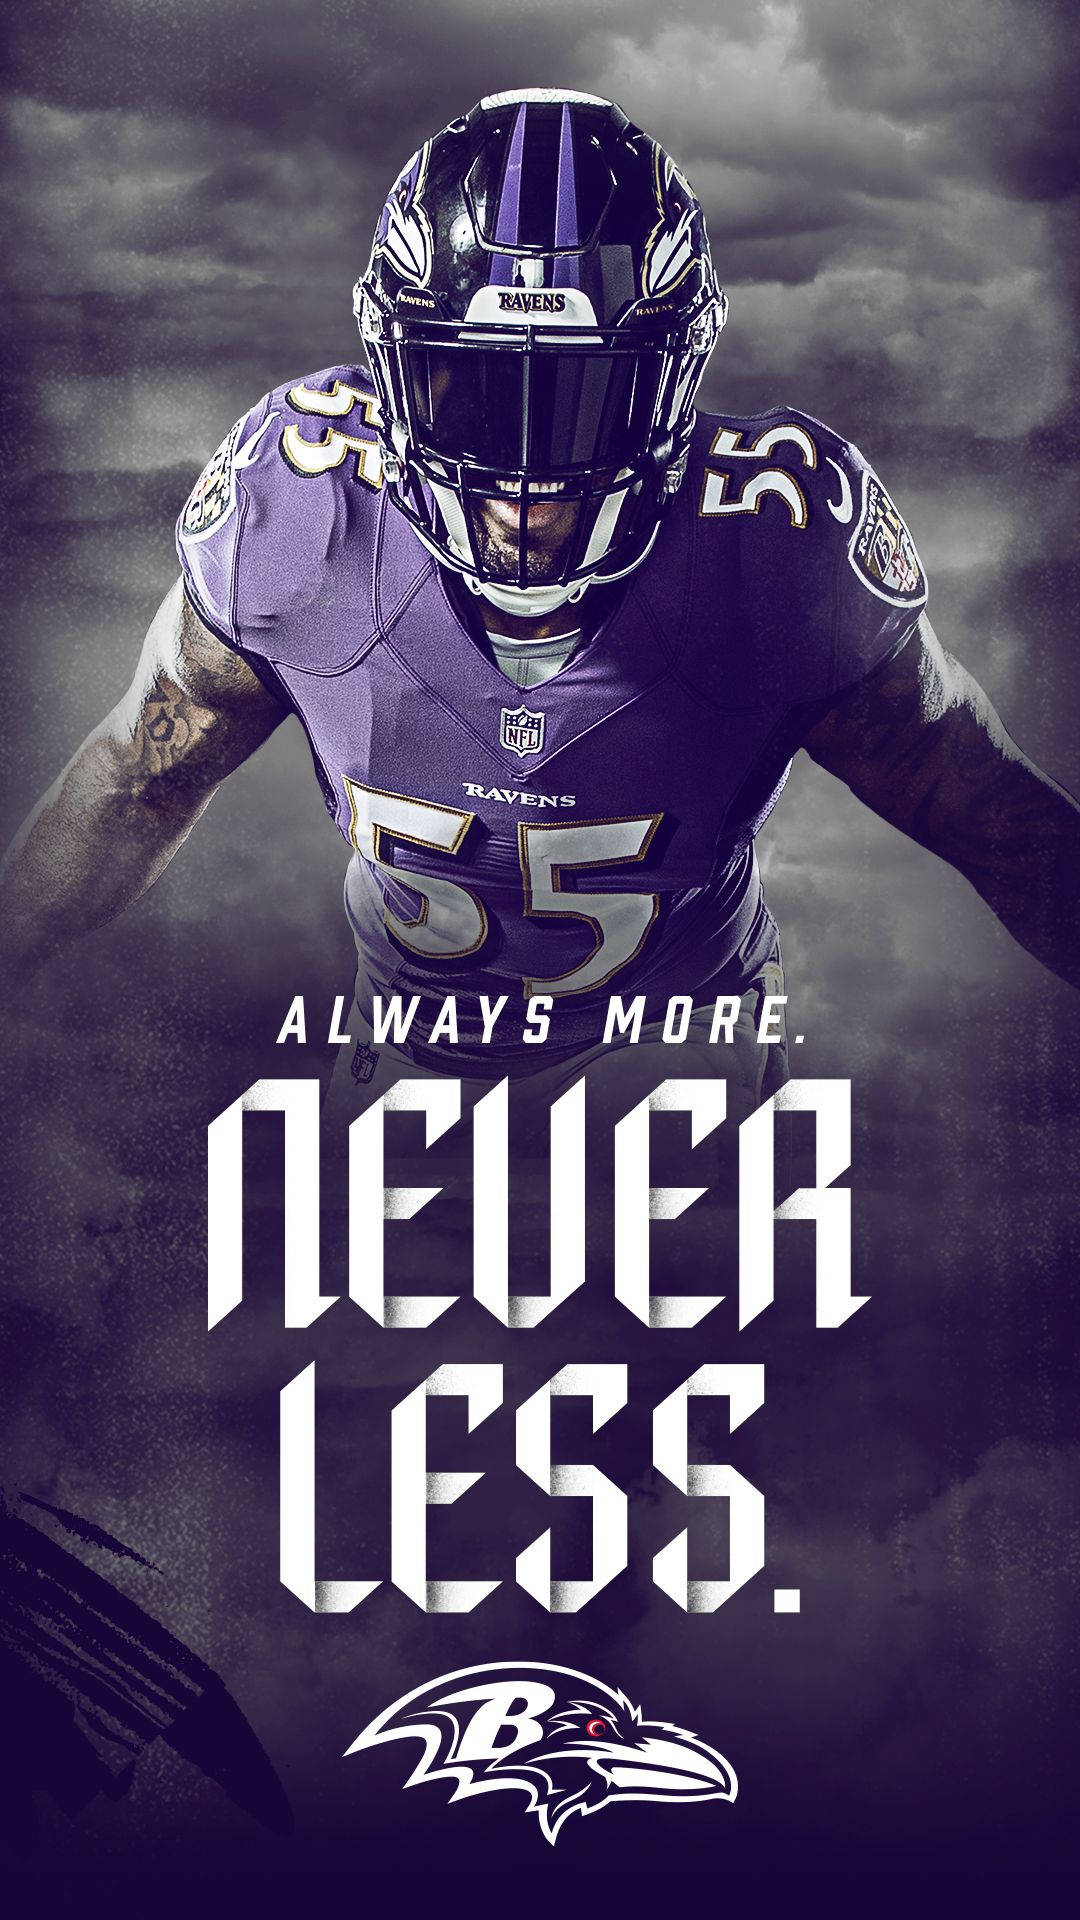 Baltimore Ravens Concept Poster Background